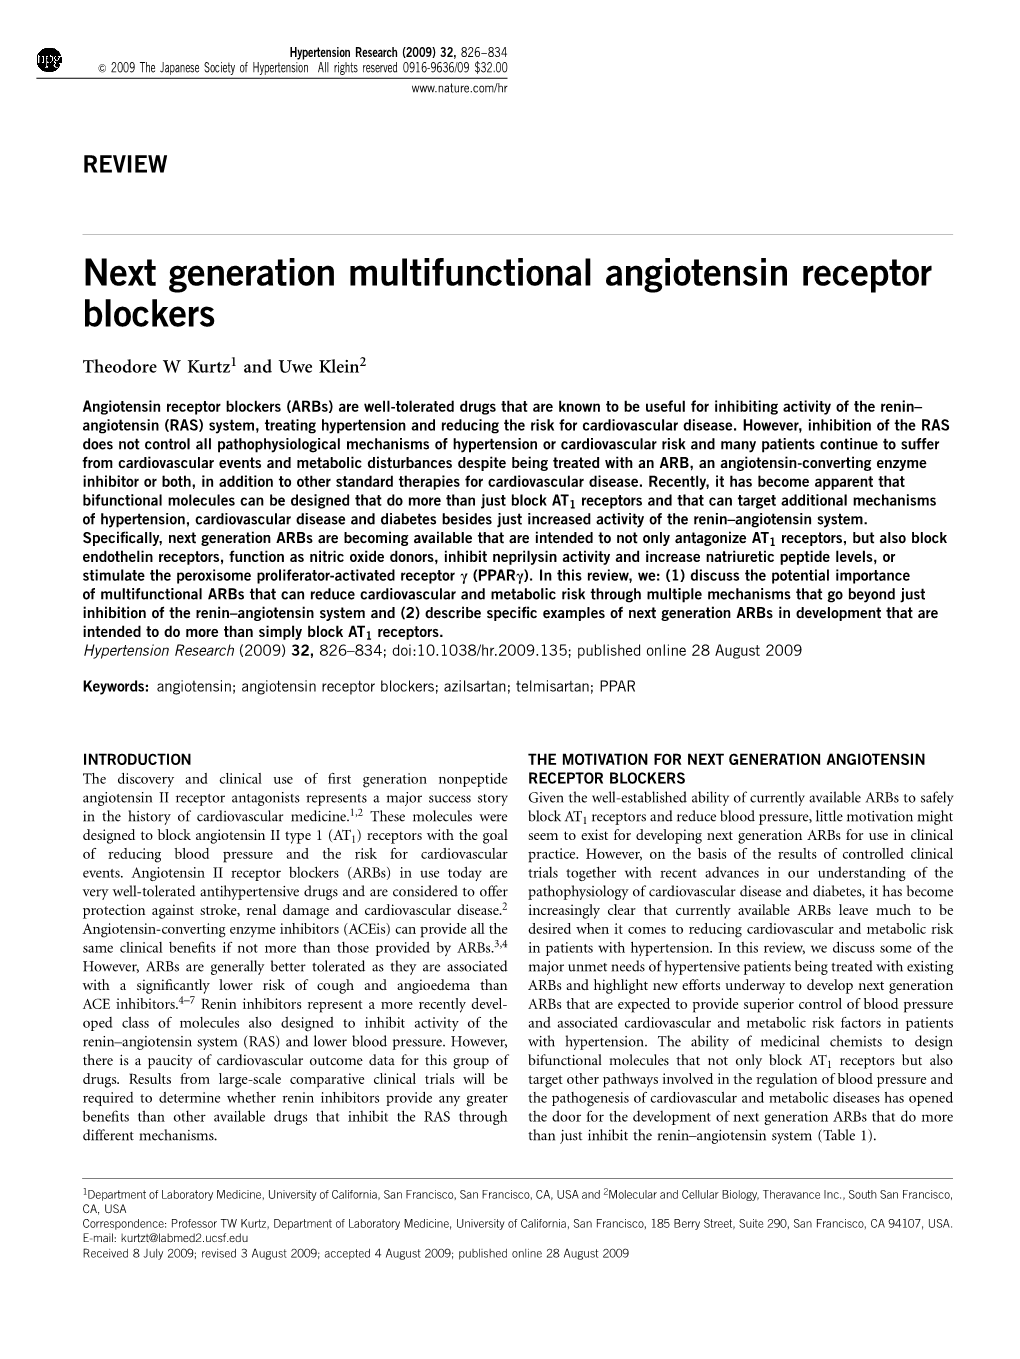 Next Generation Multifunctional Angiotensin Receptor Blockers